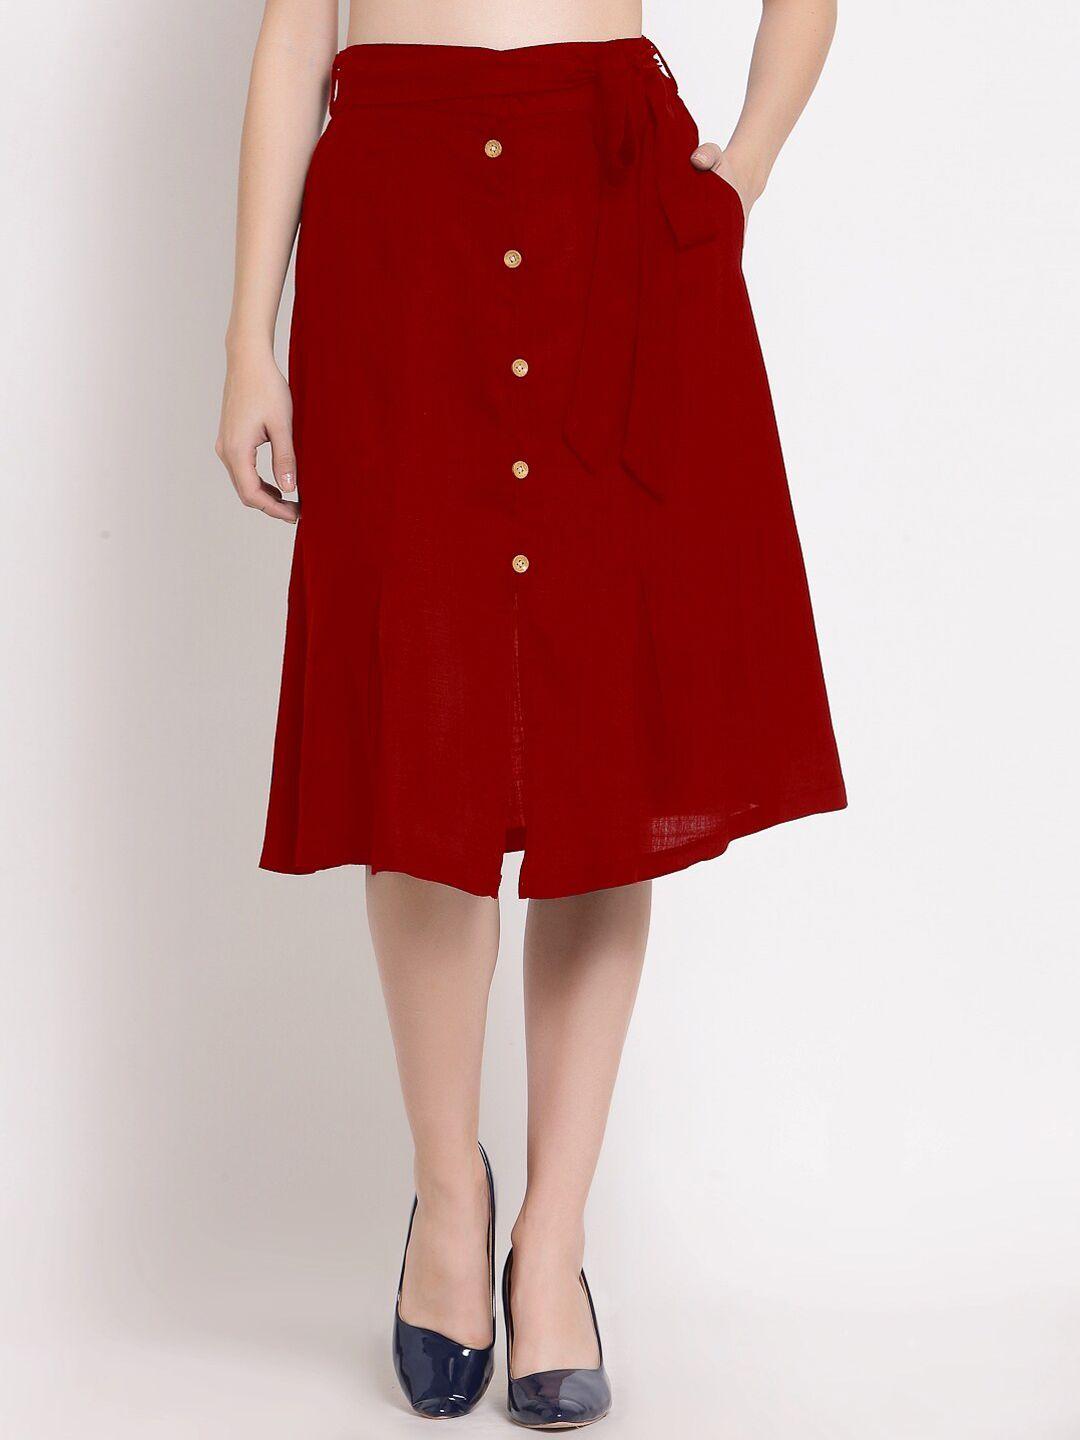 patrorna women maroon solid a-line skirt